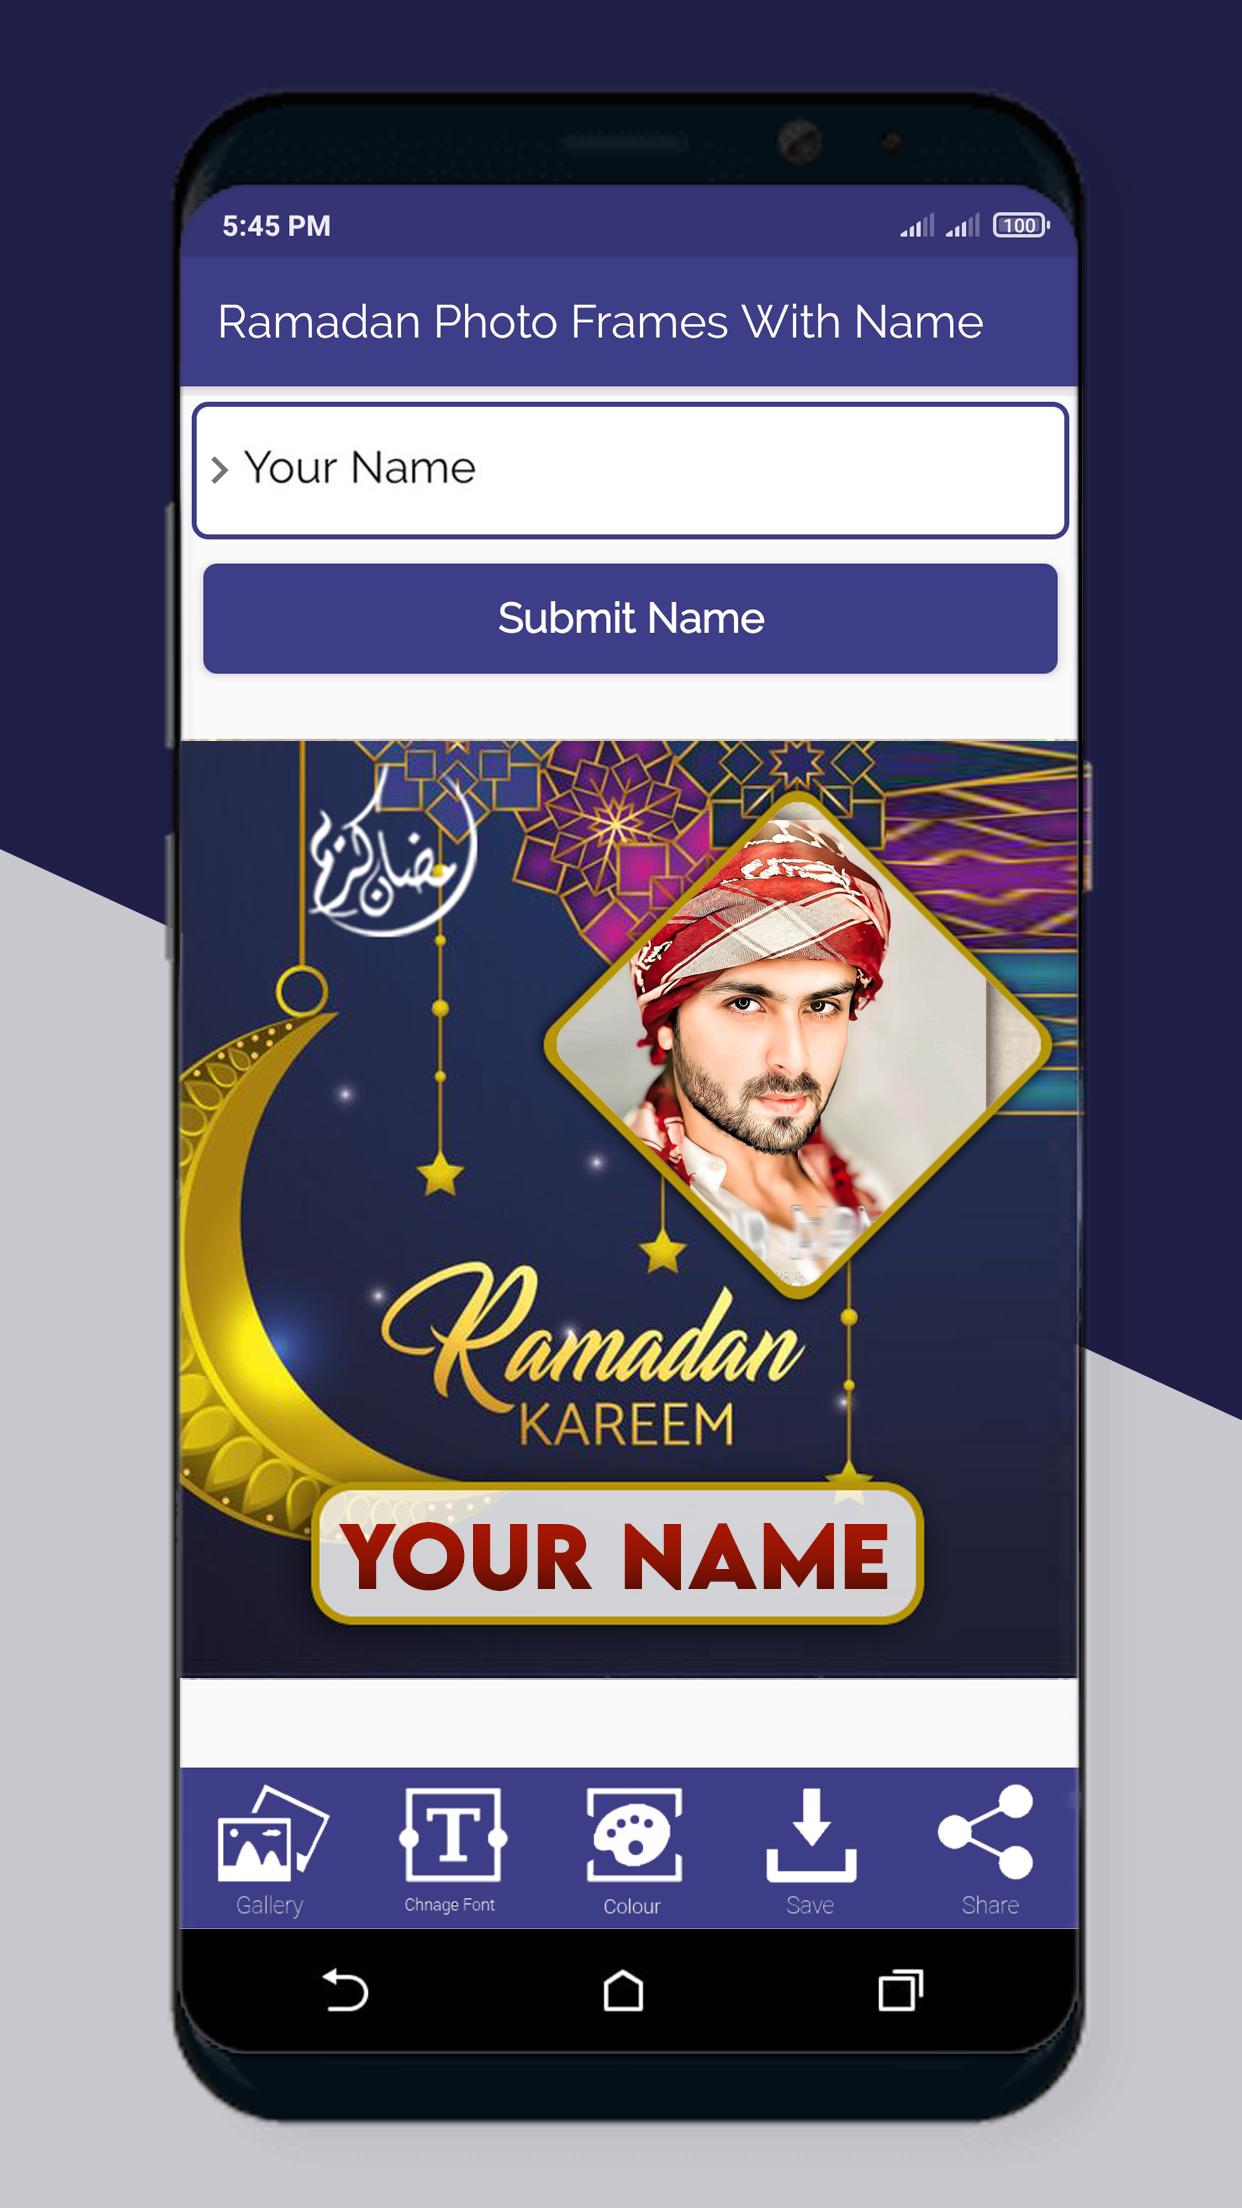 Ramadan 2021 Photo Frames With Name 3.0 Screenshot 4